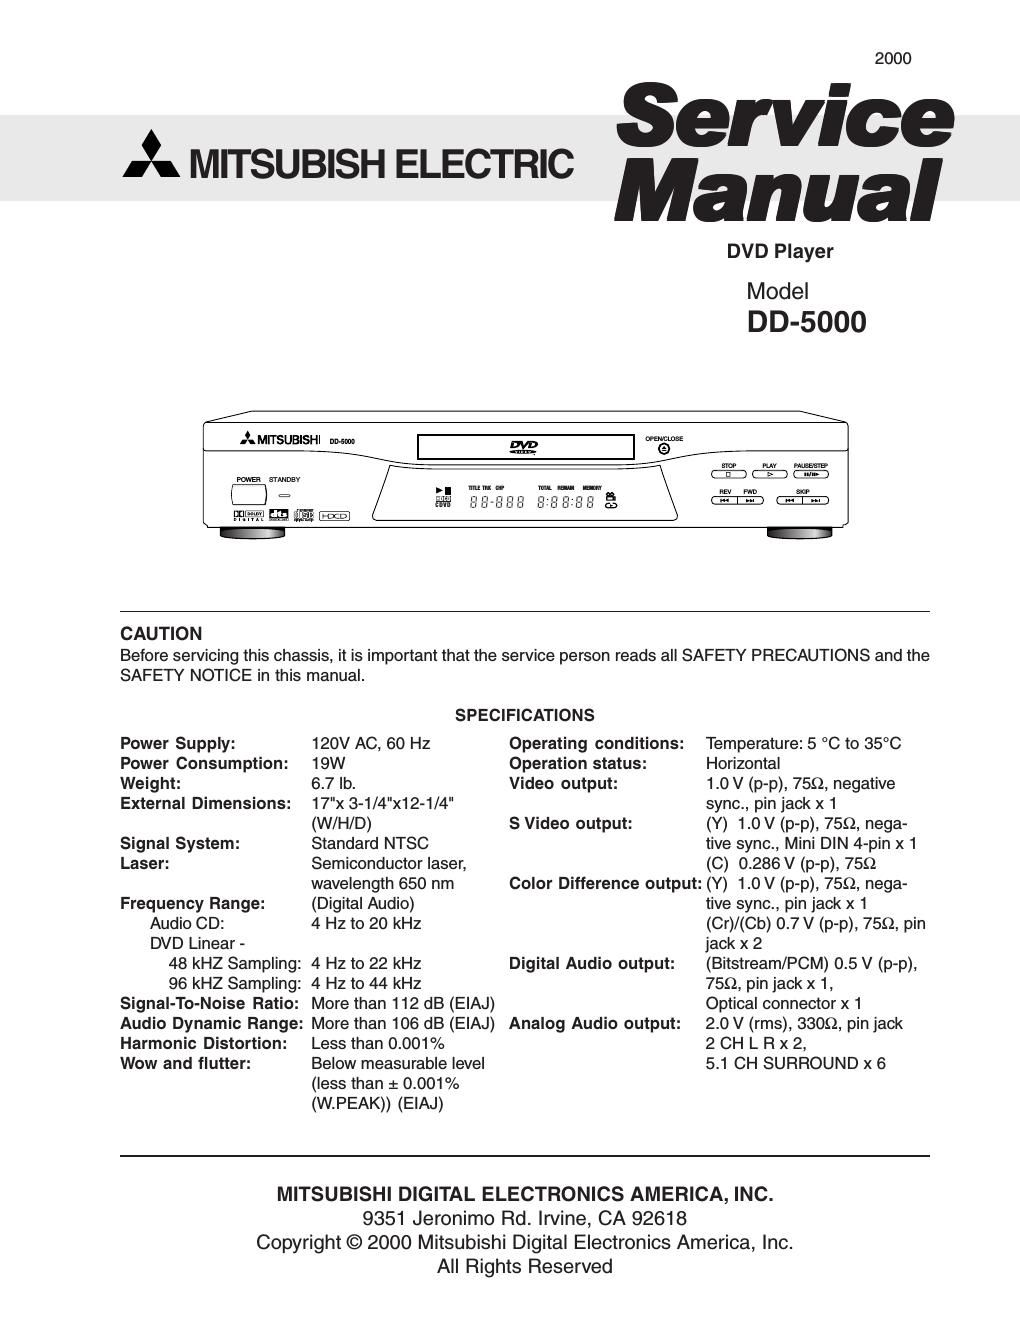 mitsubishi dd 5000 service manual